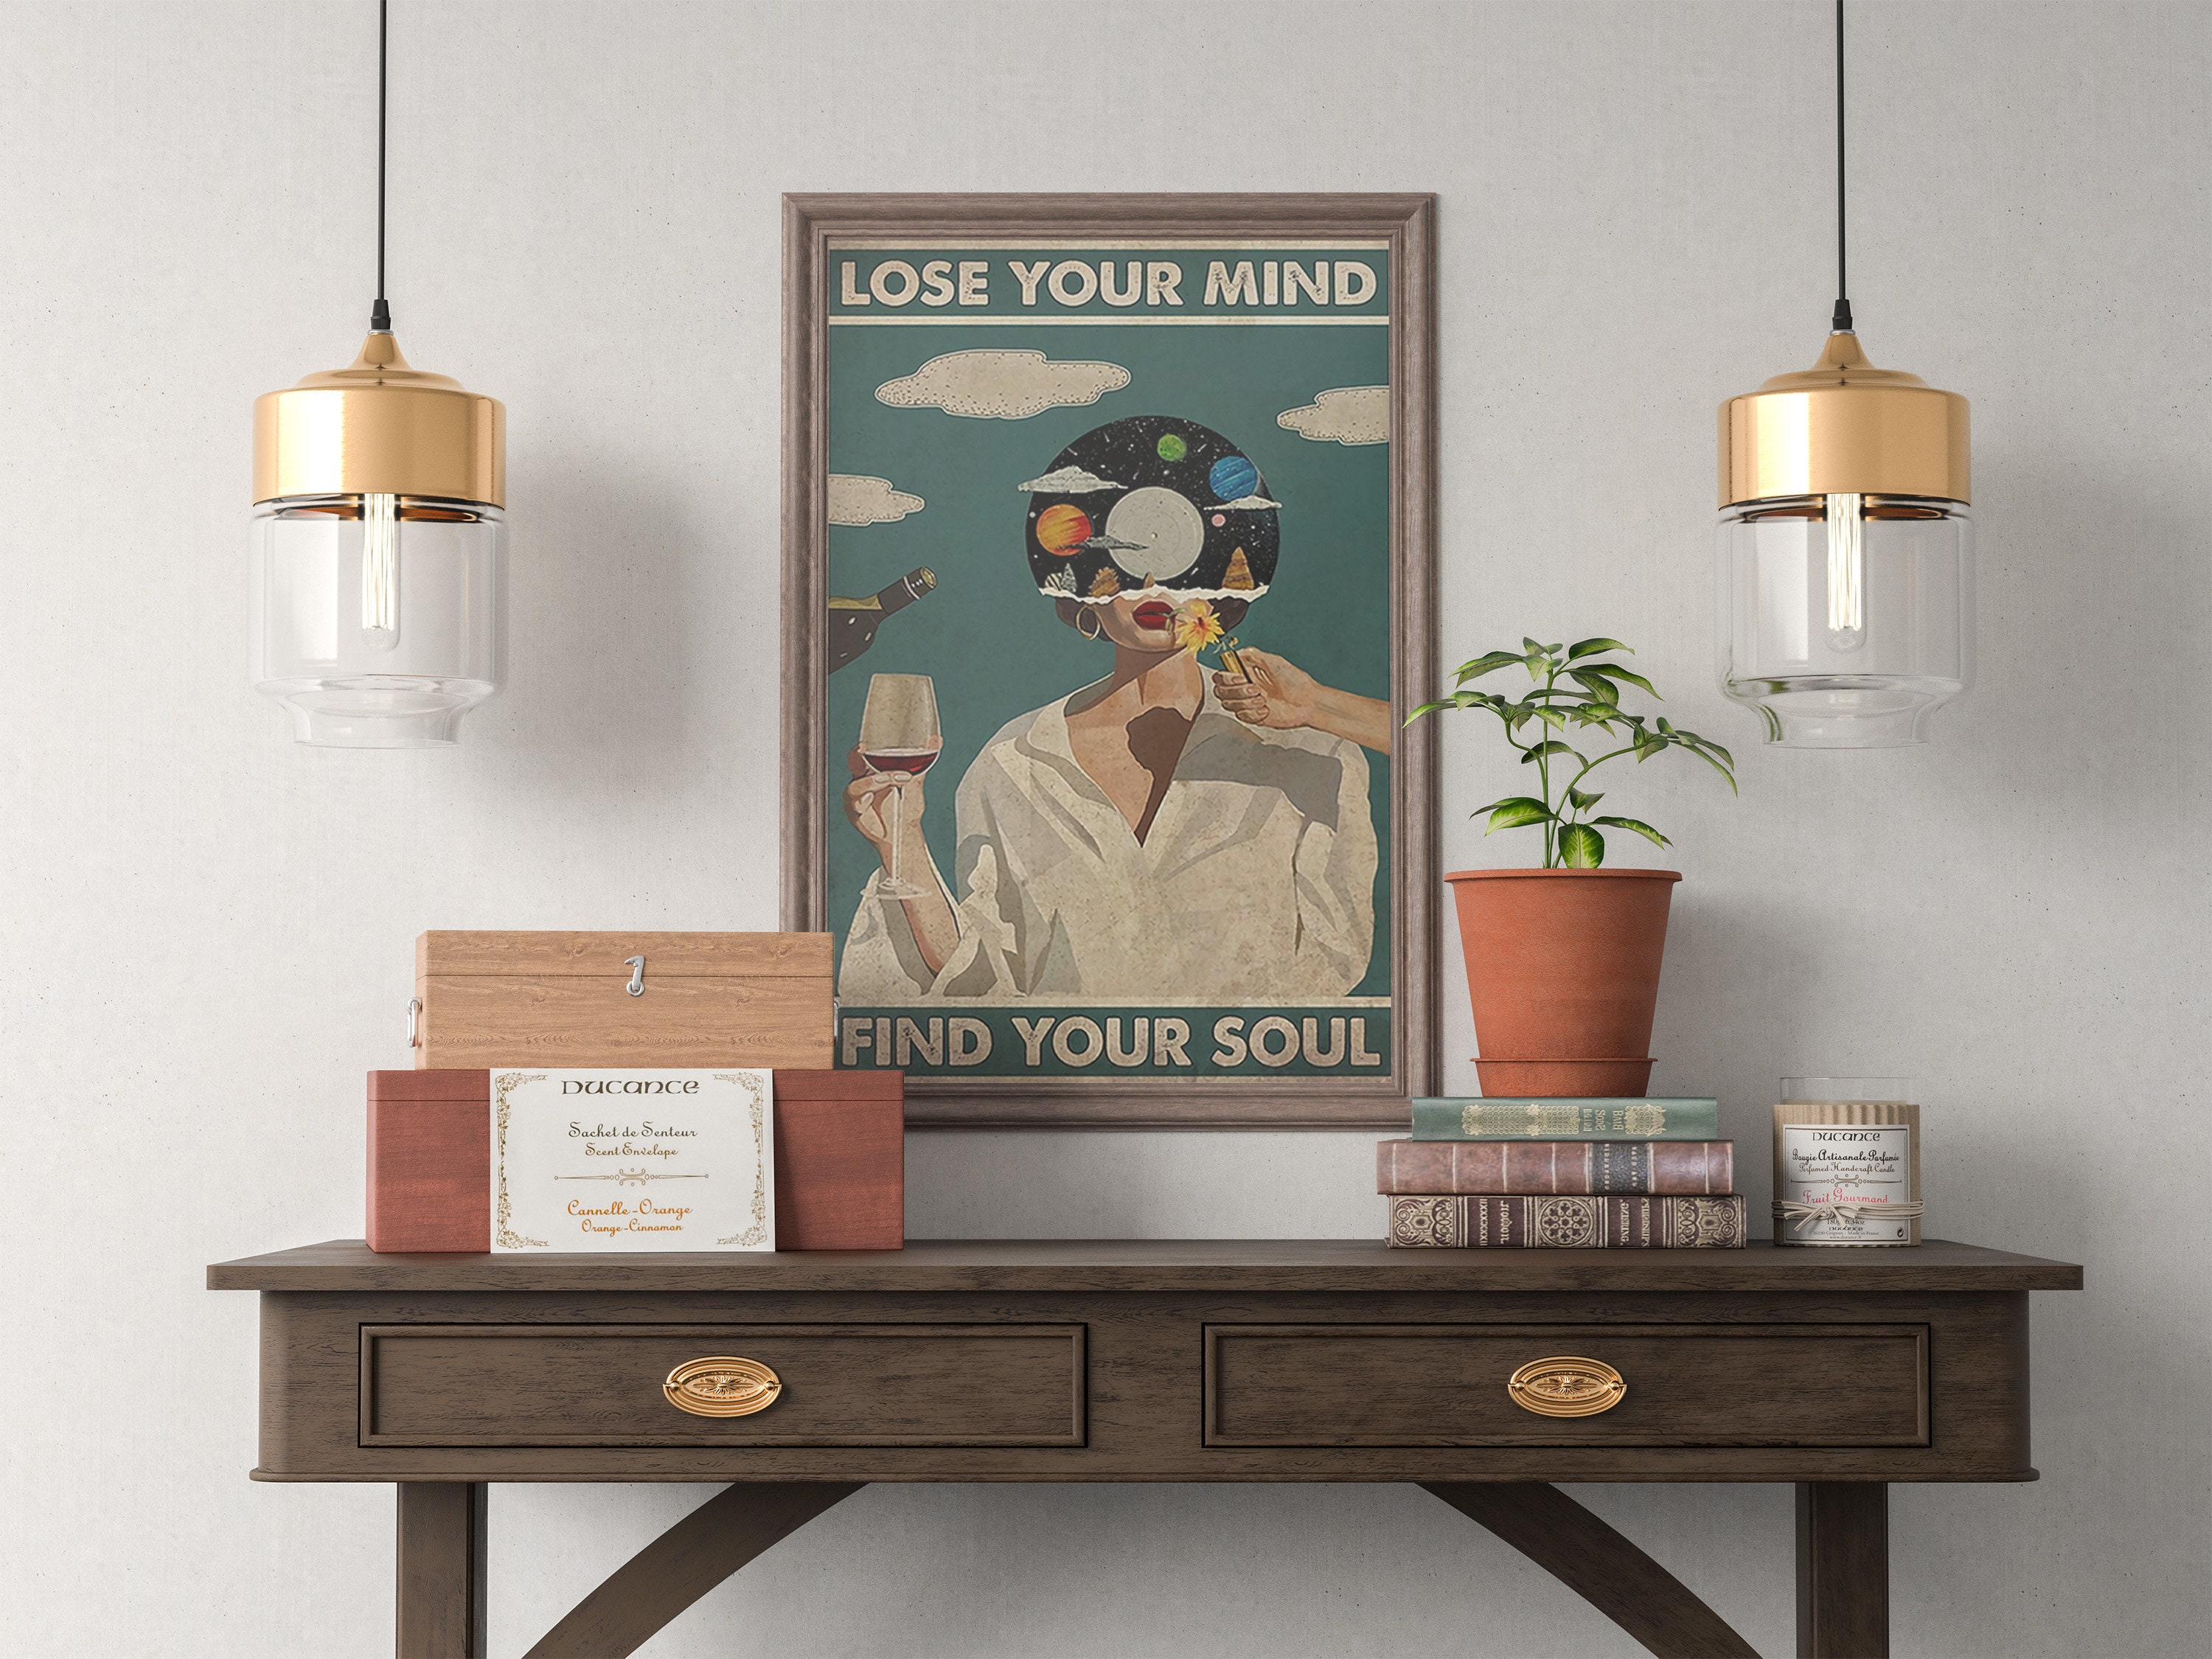 Lose Your Mind Find Your Soul Poster, Vintage Music Poster